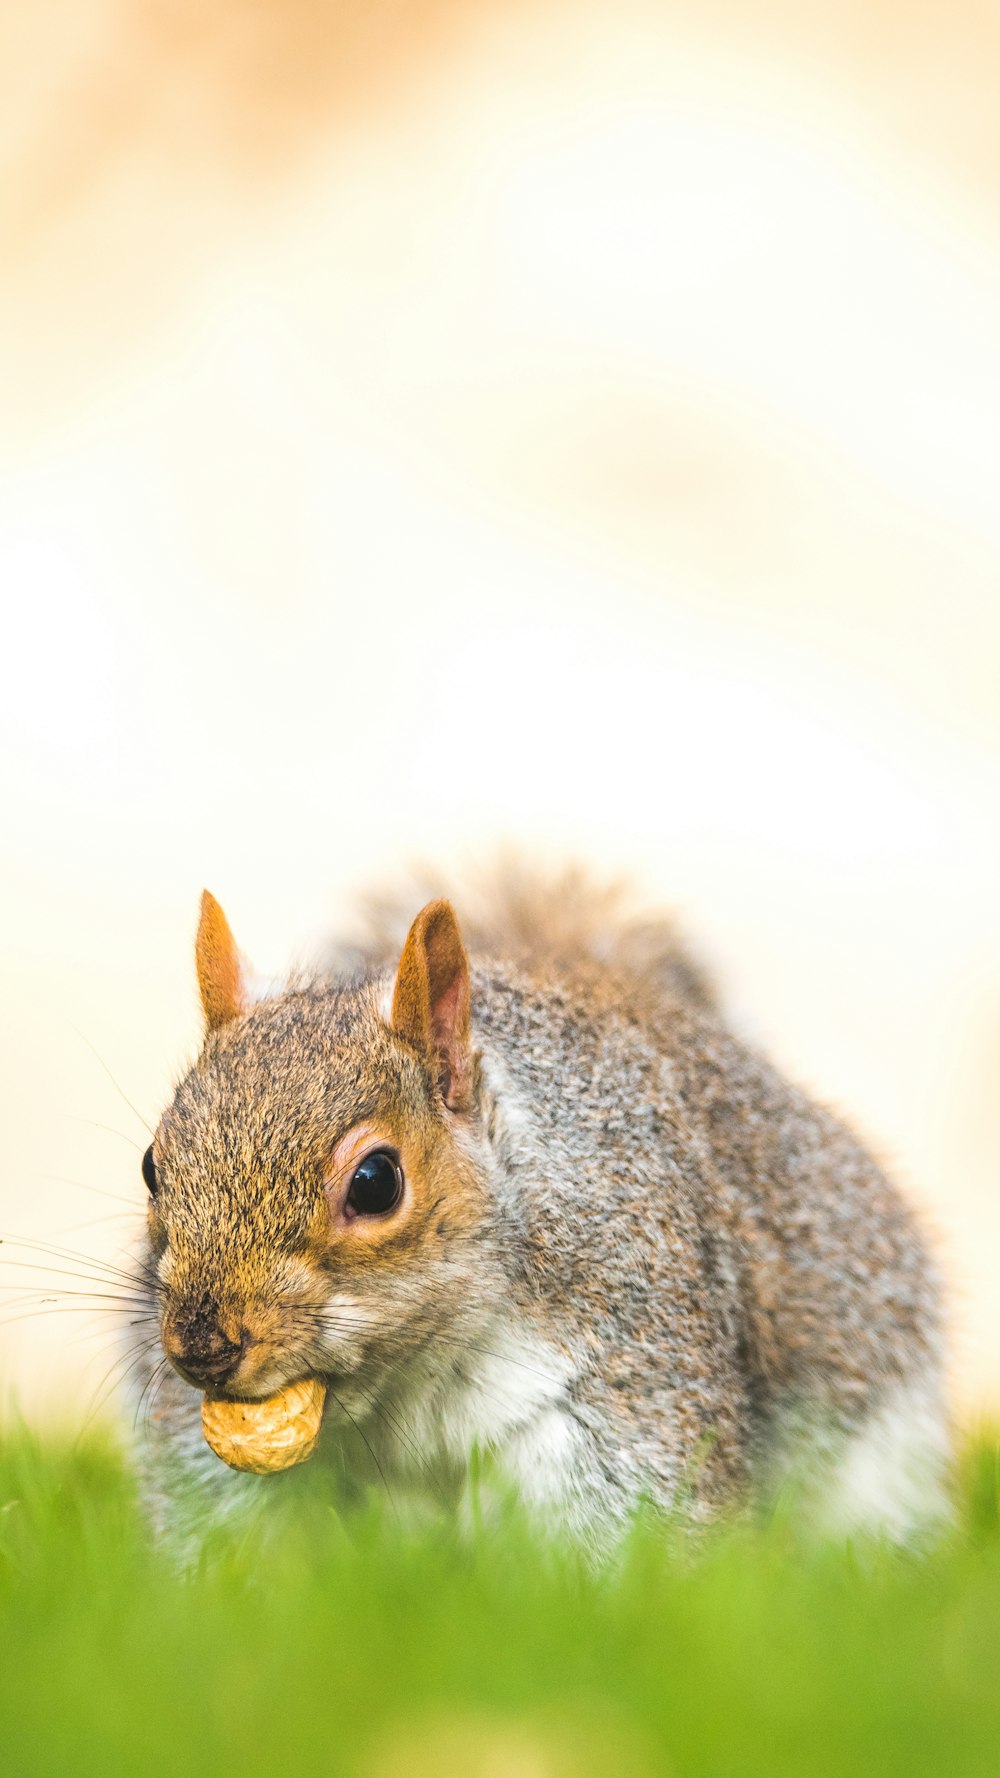 gray and white squirrel biting peanut